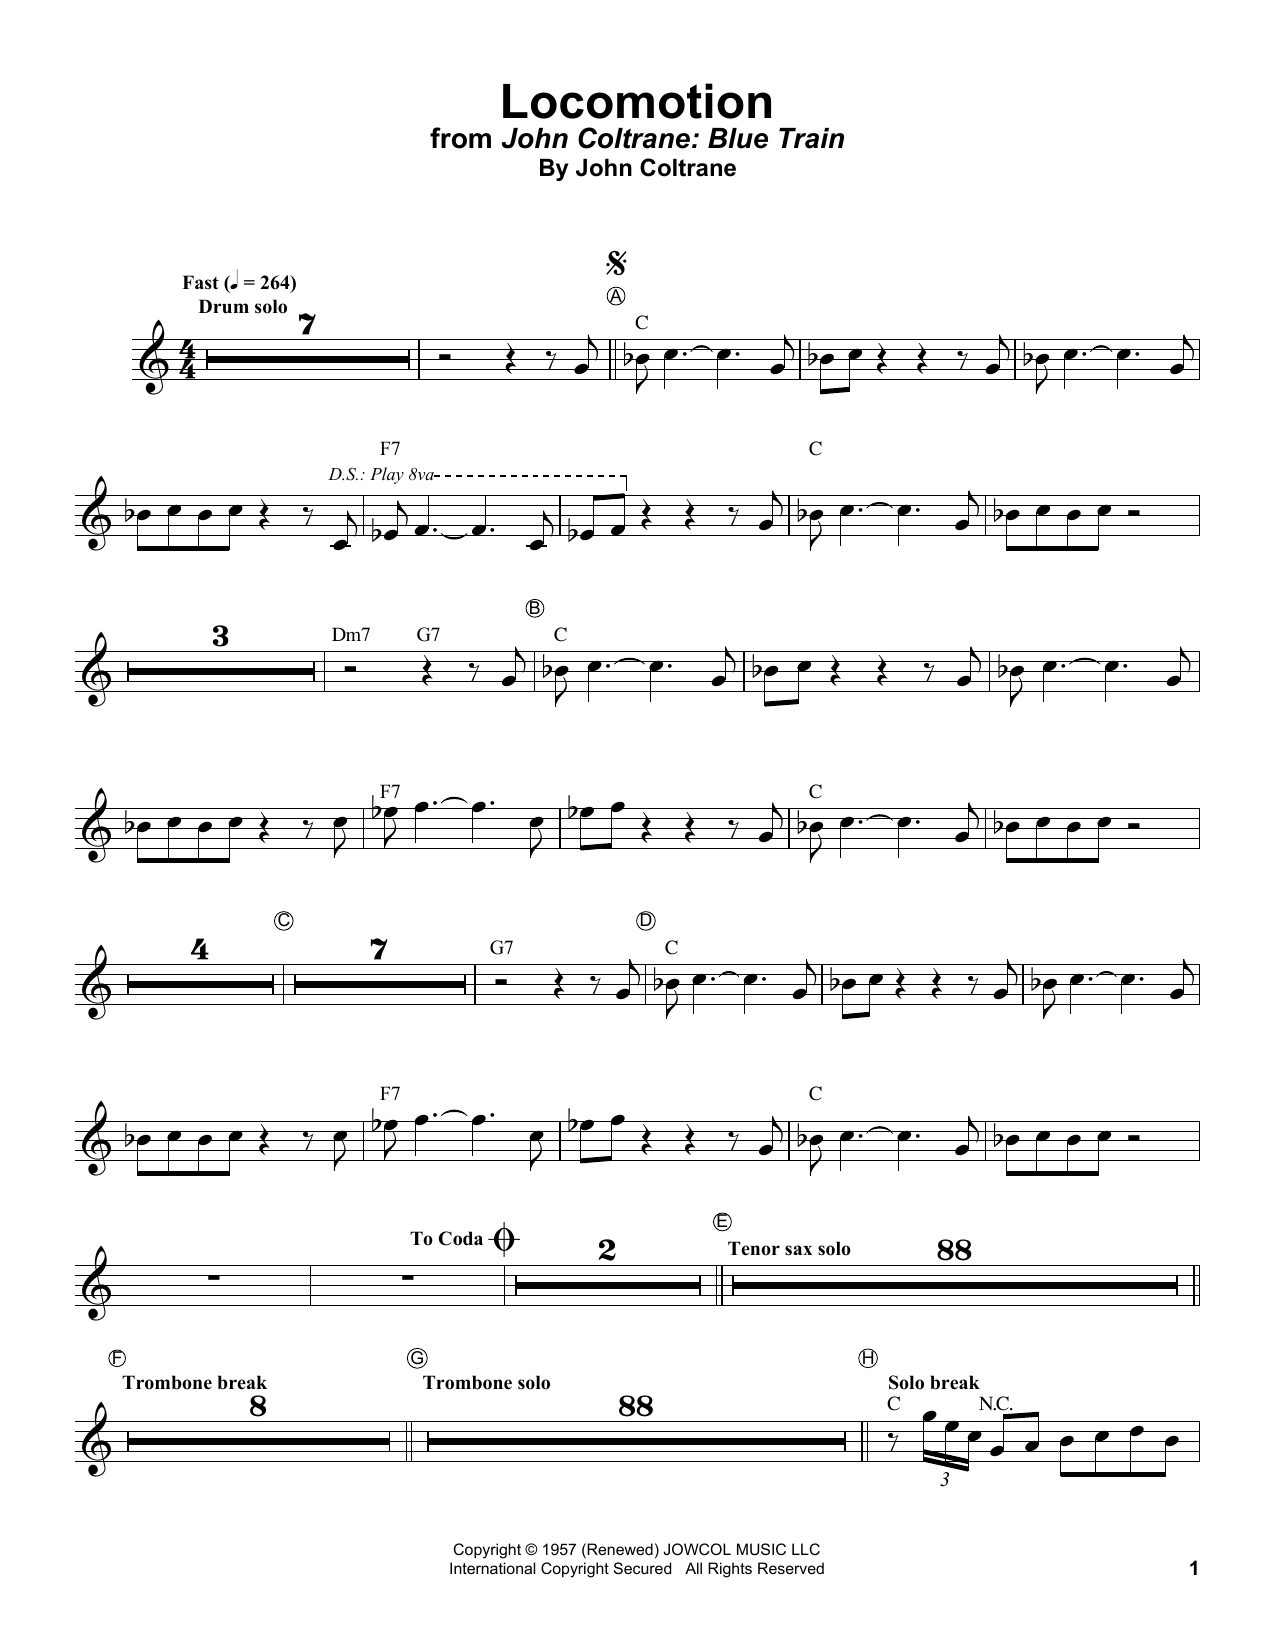 Lee Morgan Locomotion Sheet Music Notes & Chords for Trumpet Transcription - Download or Print PDF